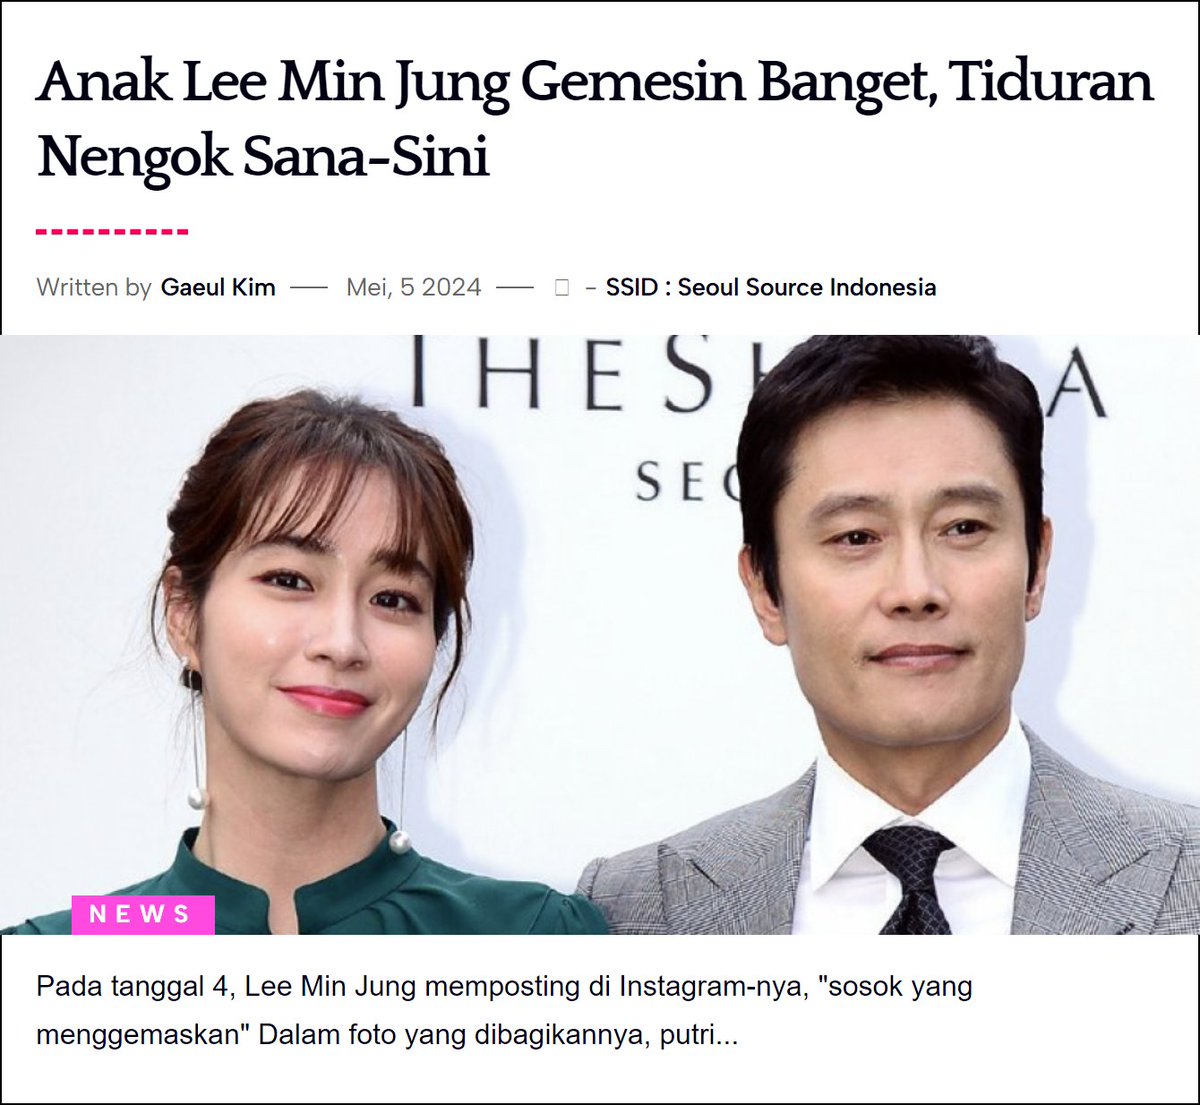 #LeeMinJung #AdorableFigure #LeeByungHun #CelebrityMom
Baca: seoulsourceid.rf.gd/anak-lee-min-j…
✨gaeul.rdz